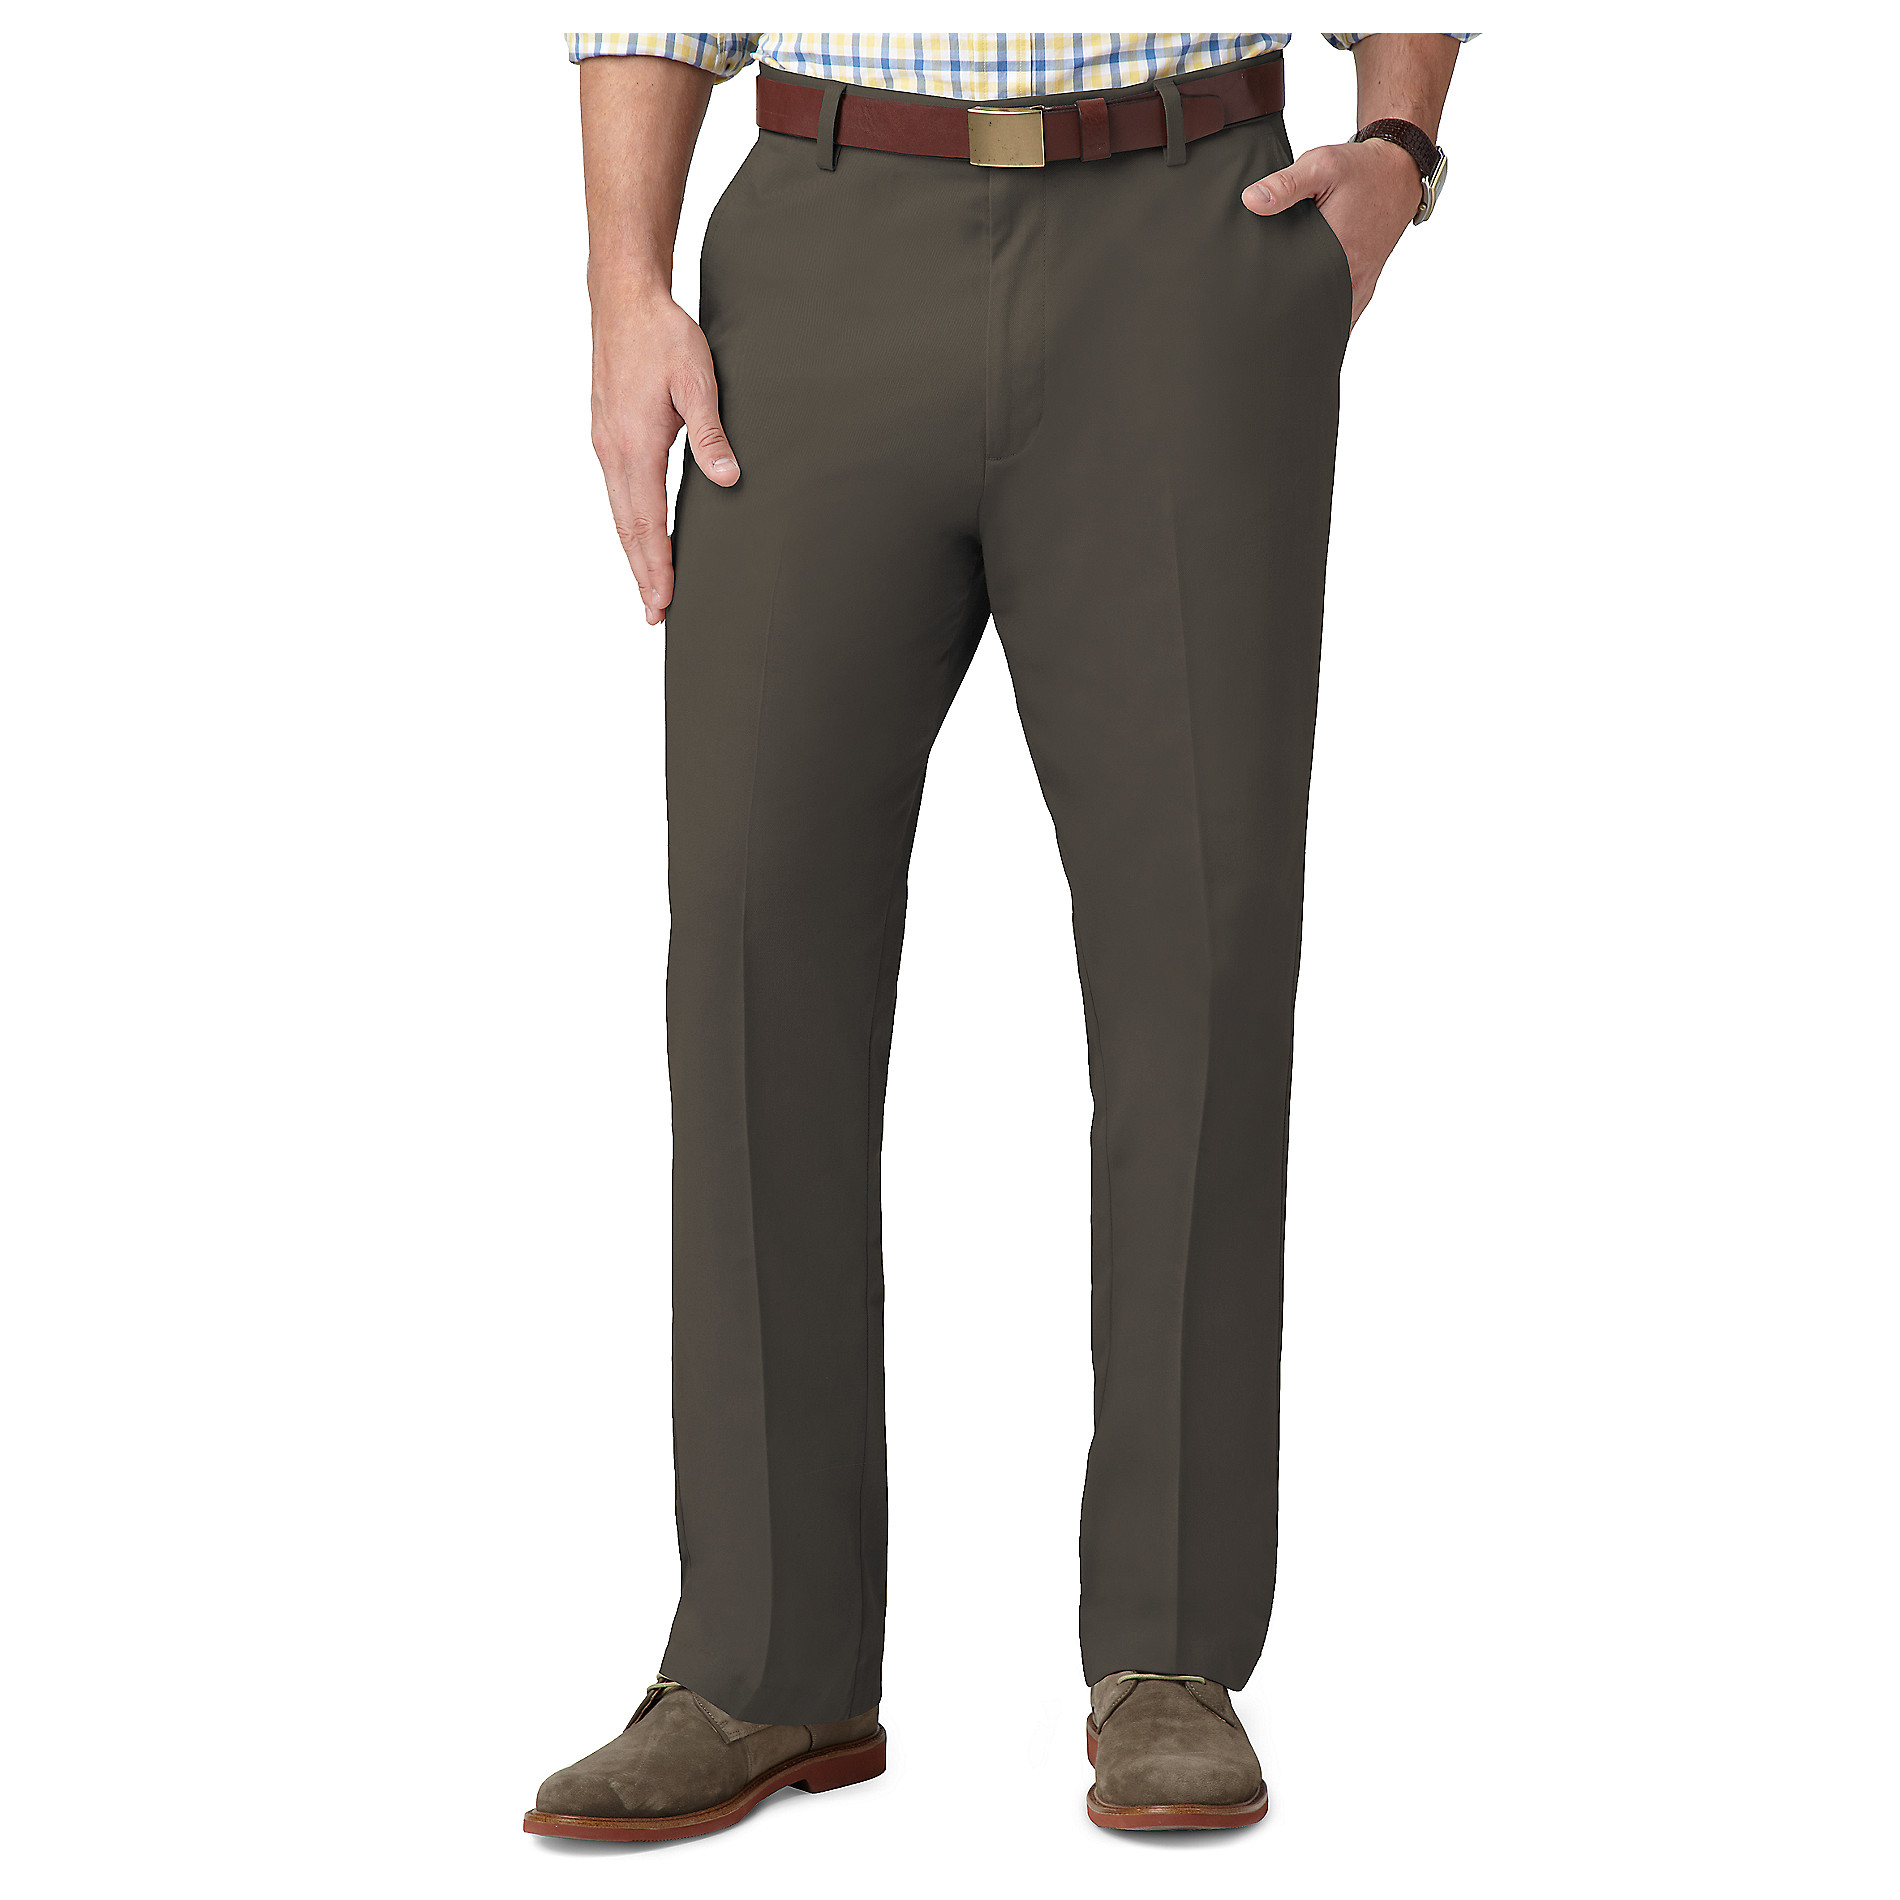 Dockers Men's Easy Khaki D3 Classic Fit Flat Front Pants